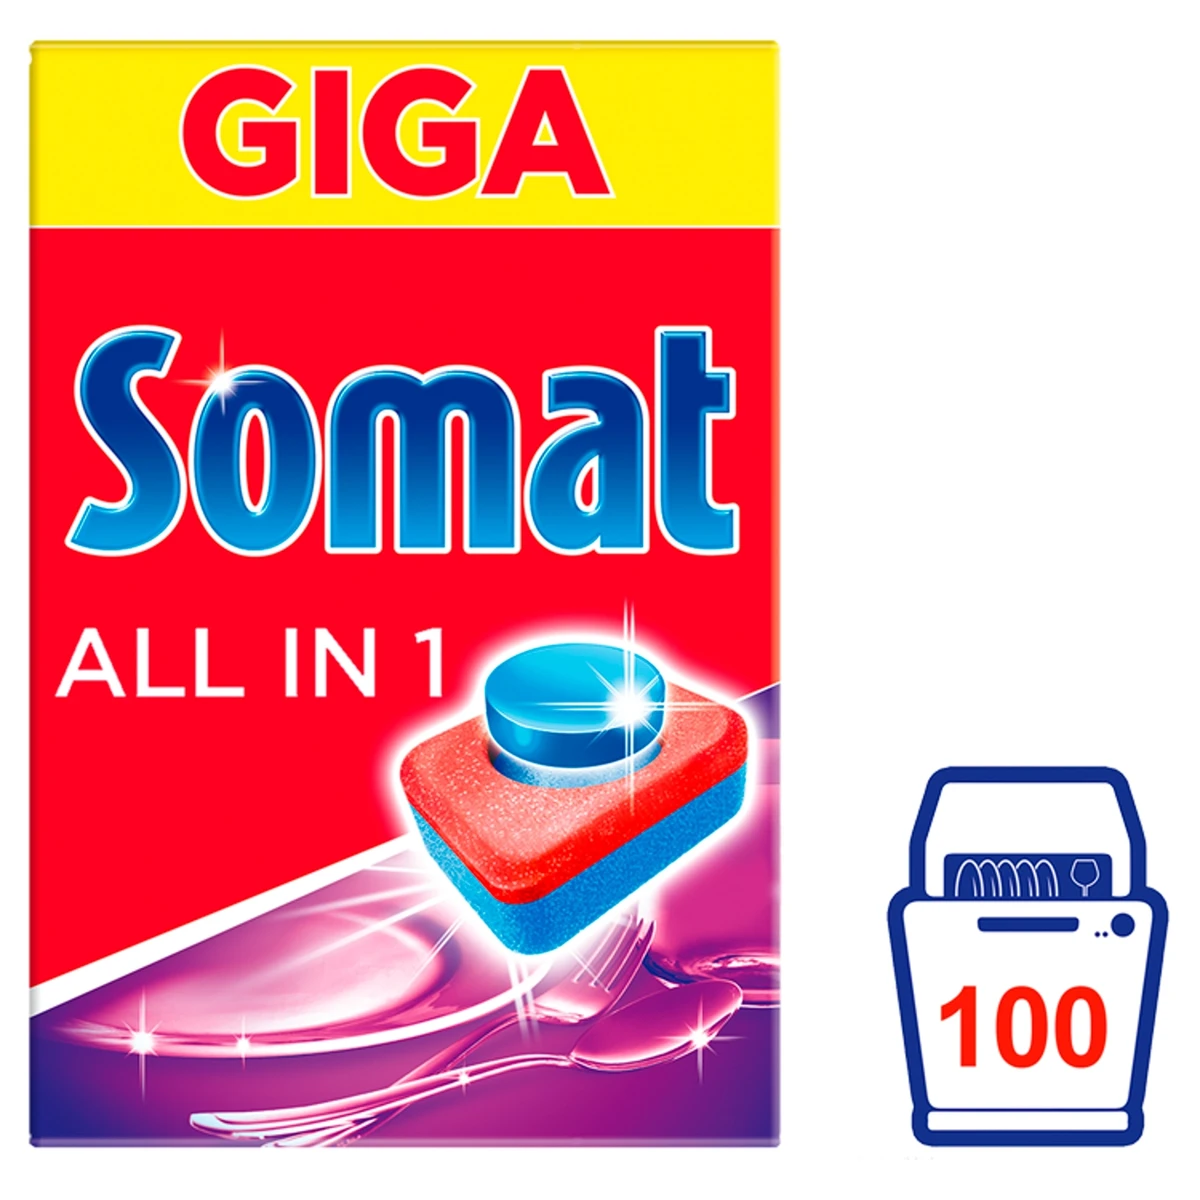 Somat All in One gépi mosogatószer tabletta 100 db 1800 g